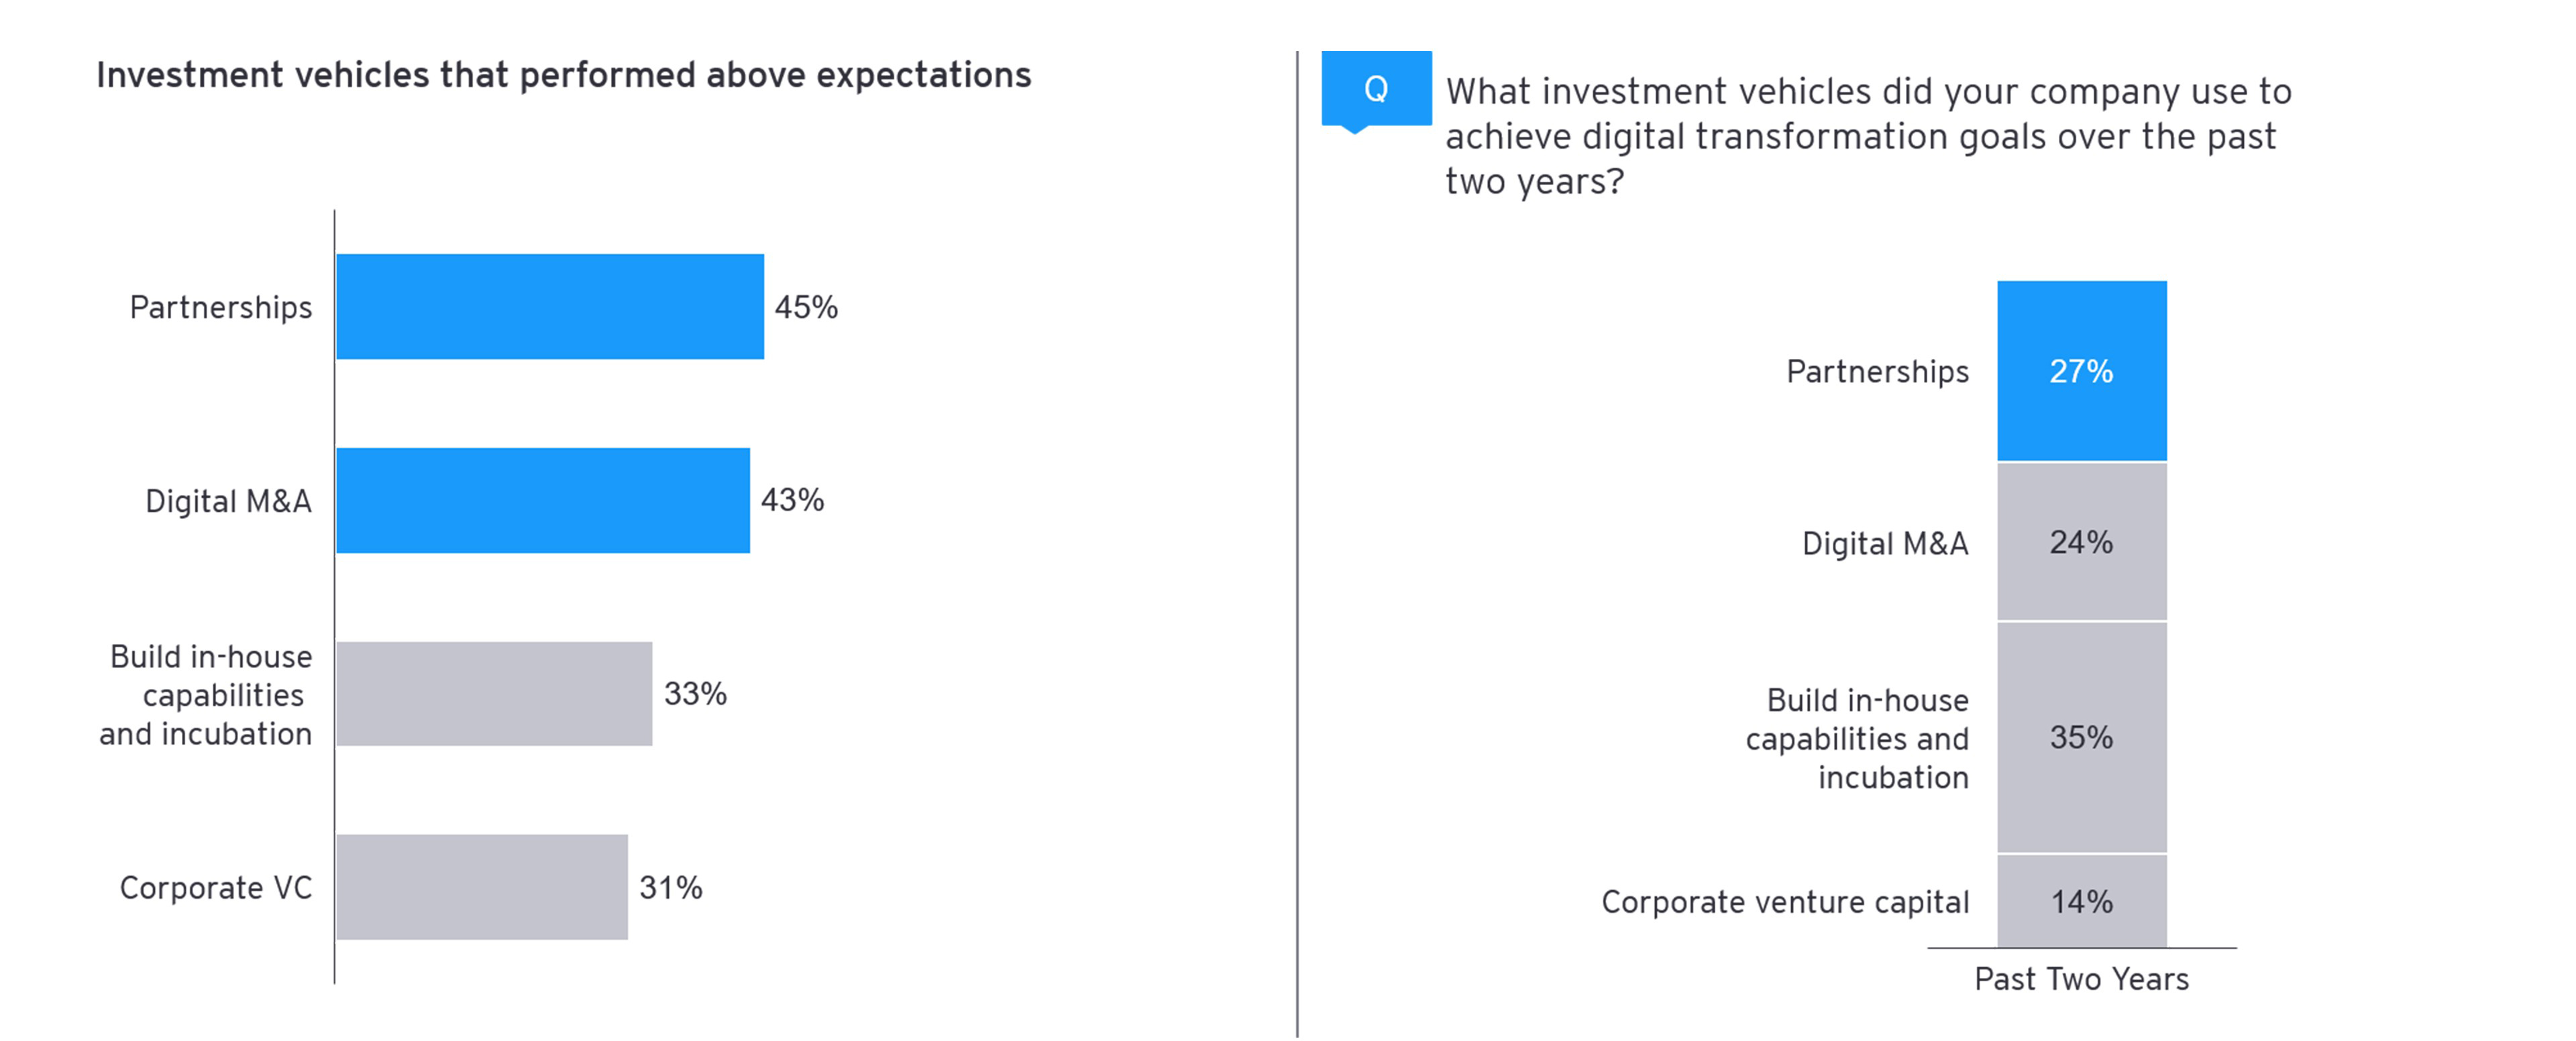 Investment vehicles, per Life Sciences Digital Investment Index (DII) survey